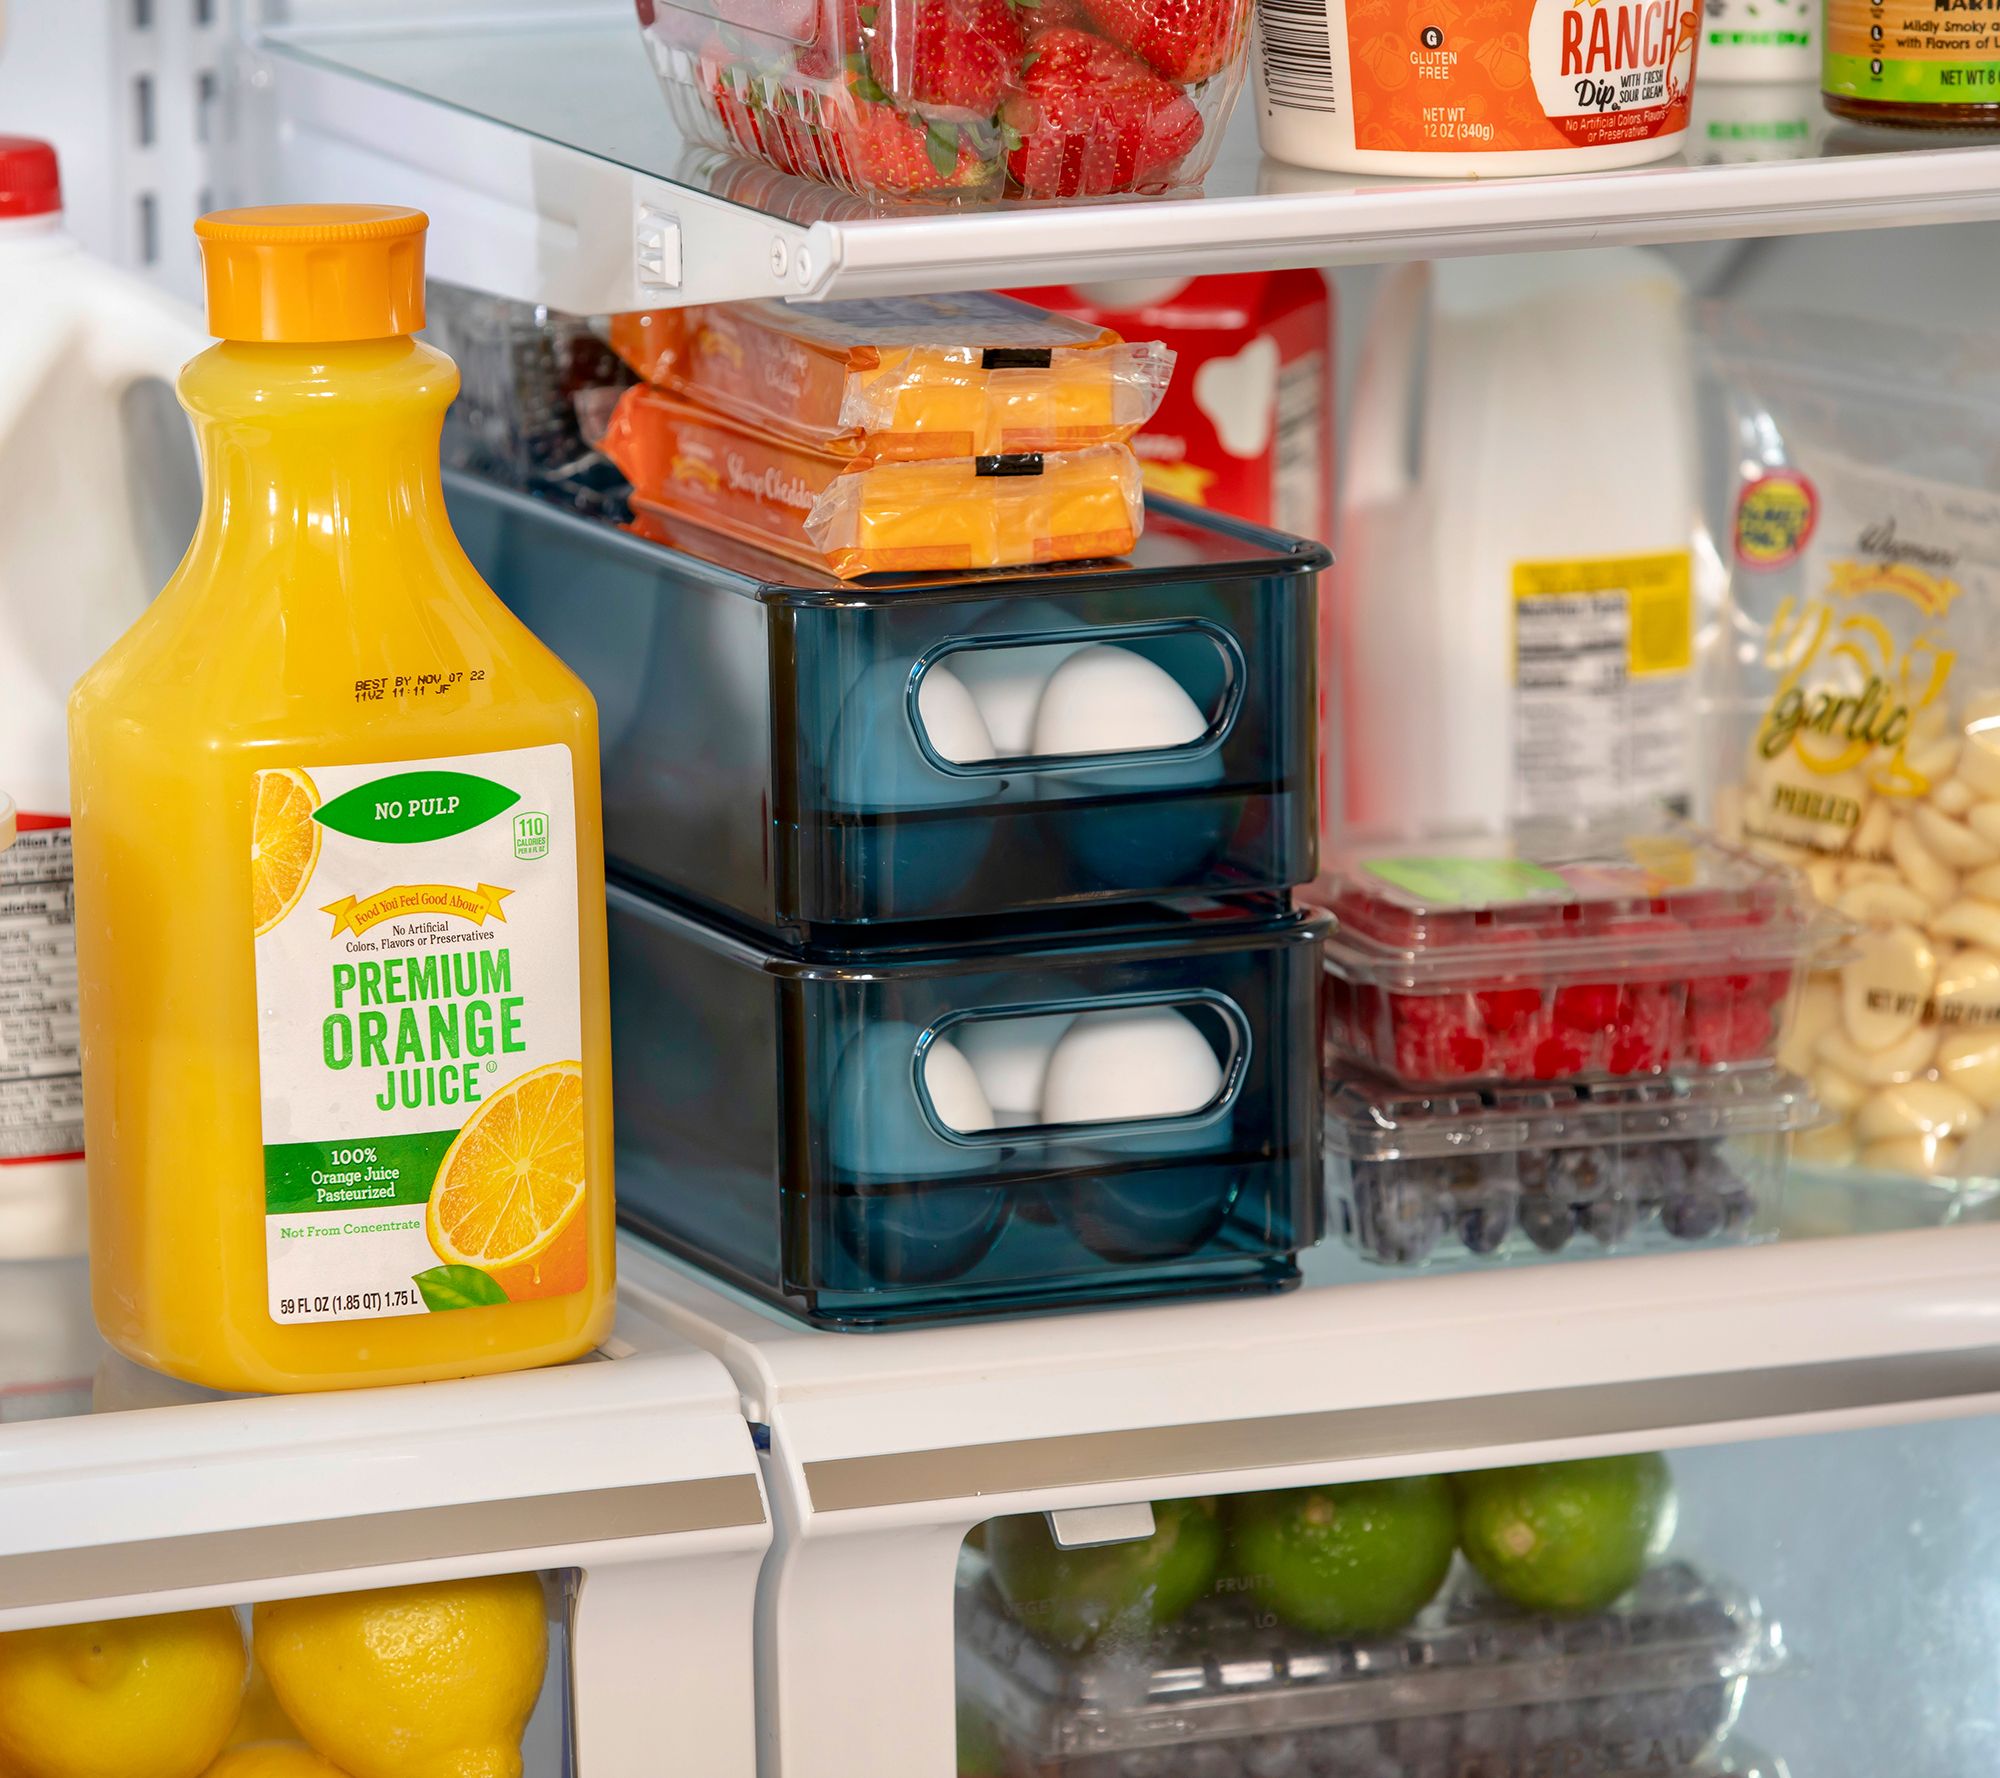 Kitchen Hanging Organizer Refrigerator Egg Fruit Vegetables Storage Box  Drawer